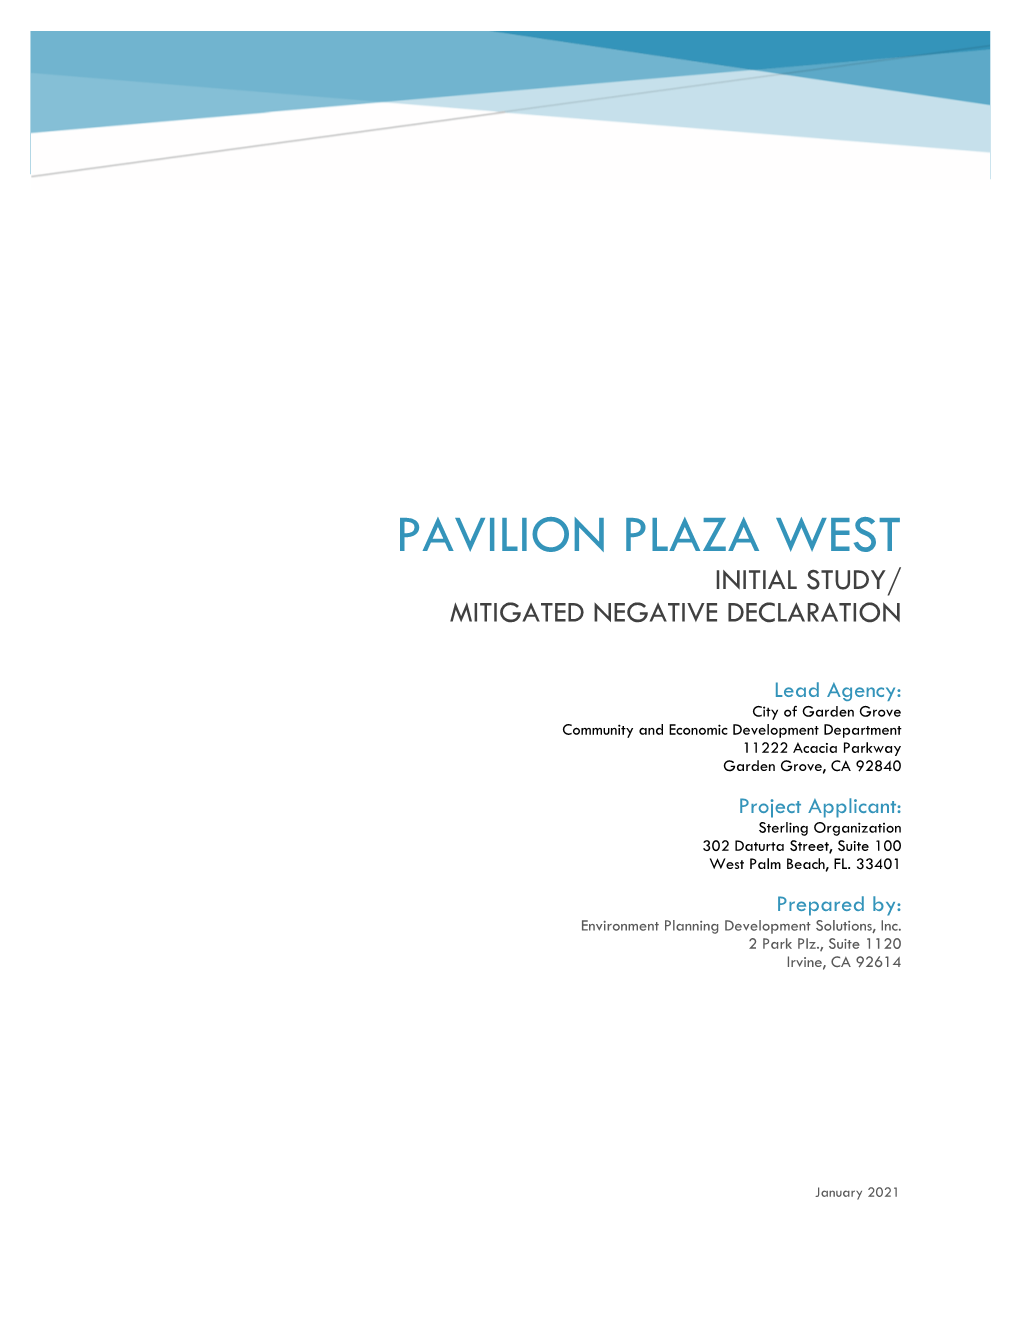 Pavilion Plaza West Initial Study/ Mitigated Negative Declaration